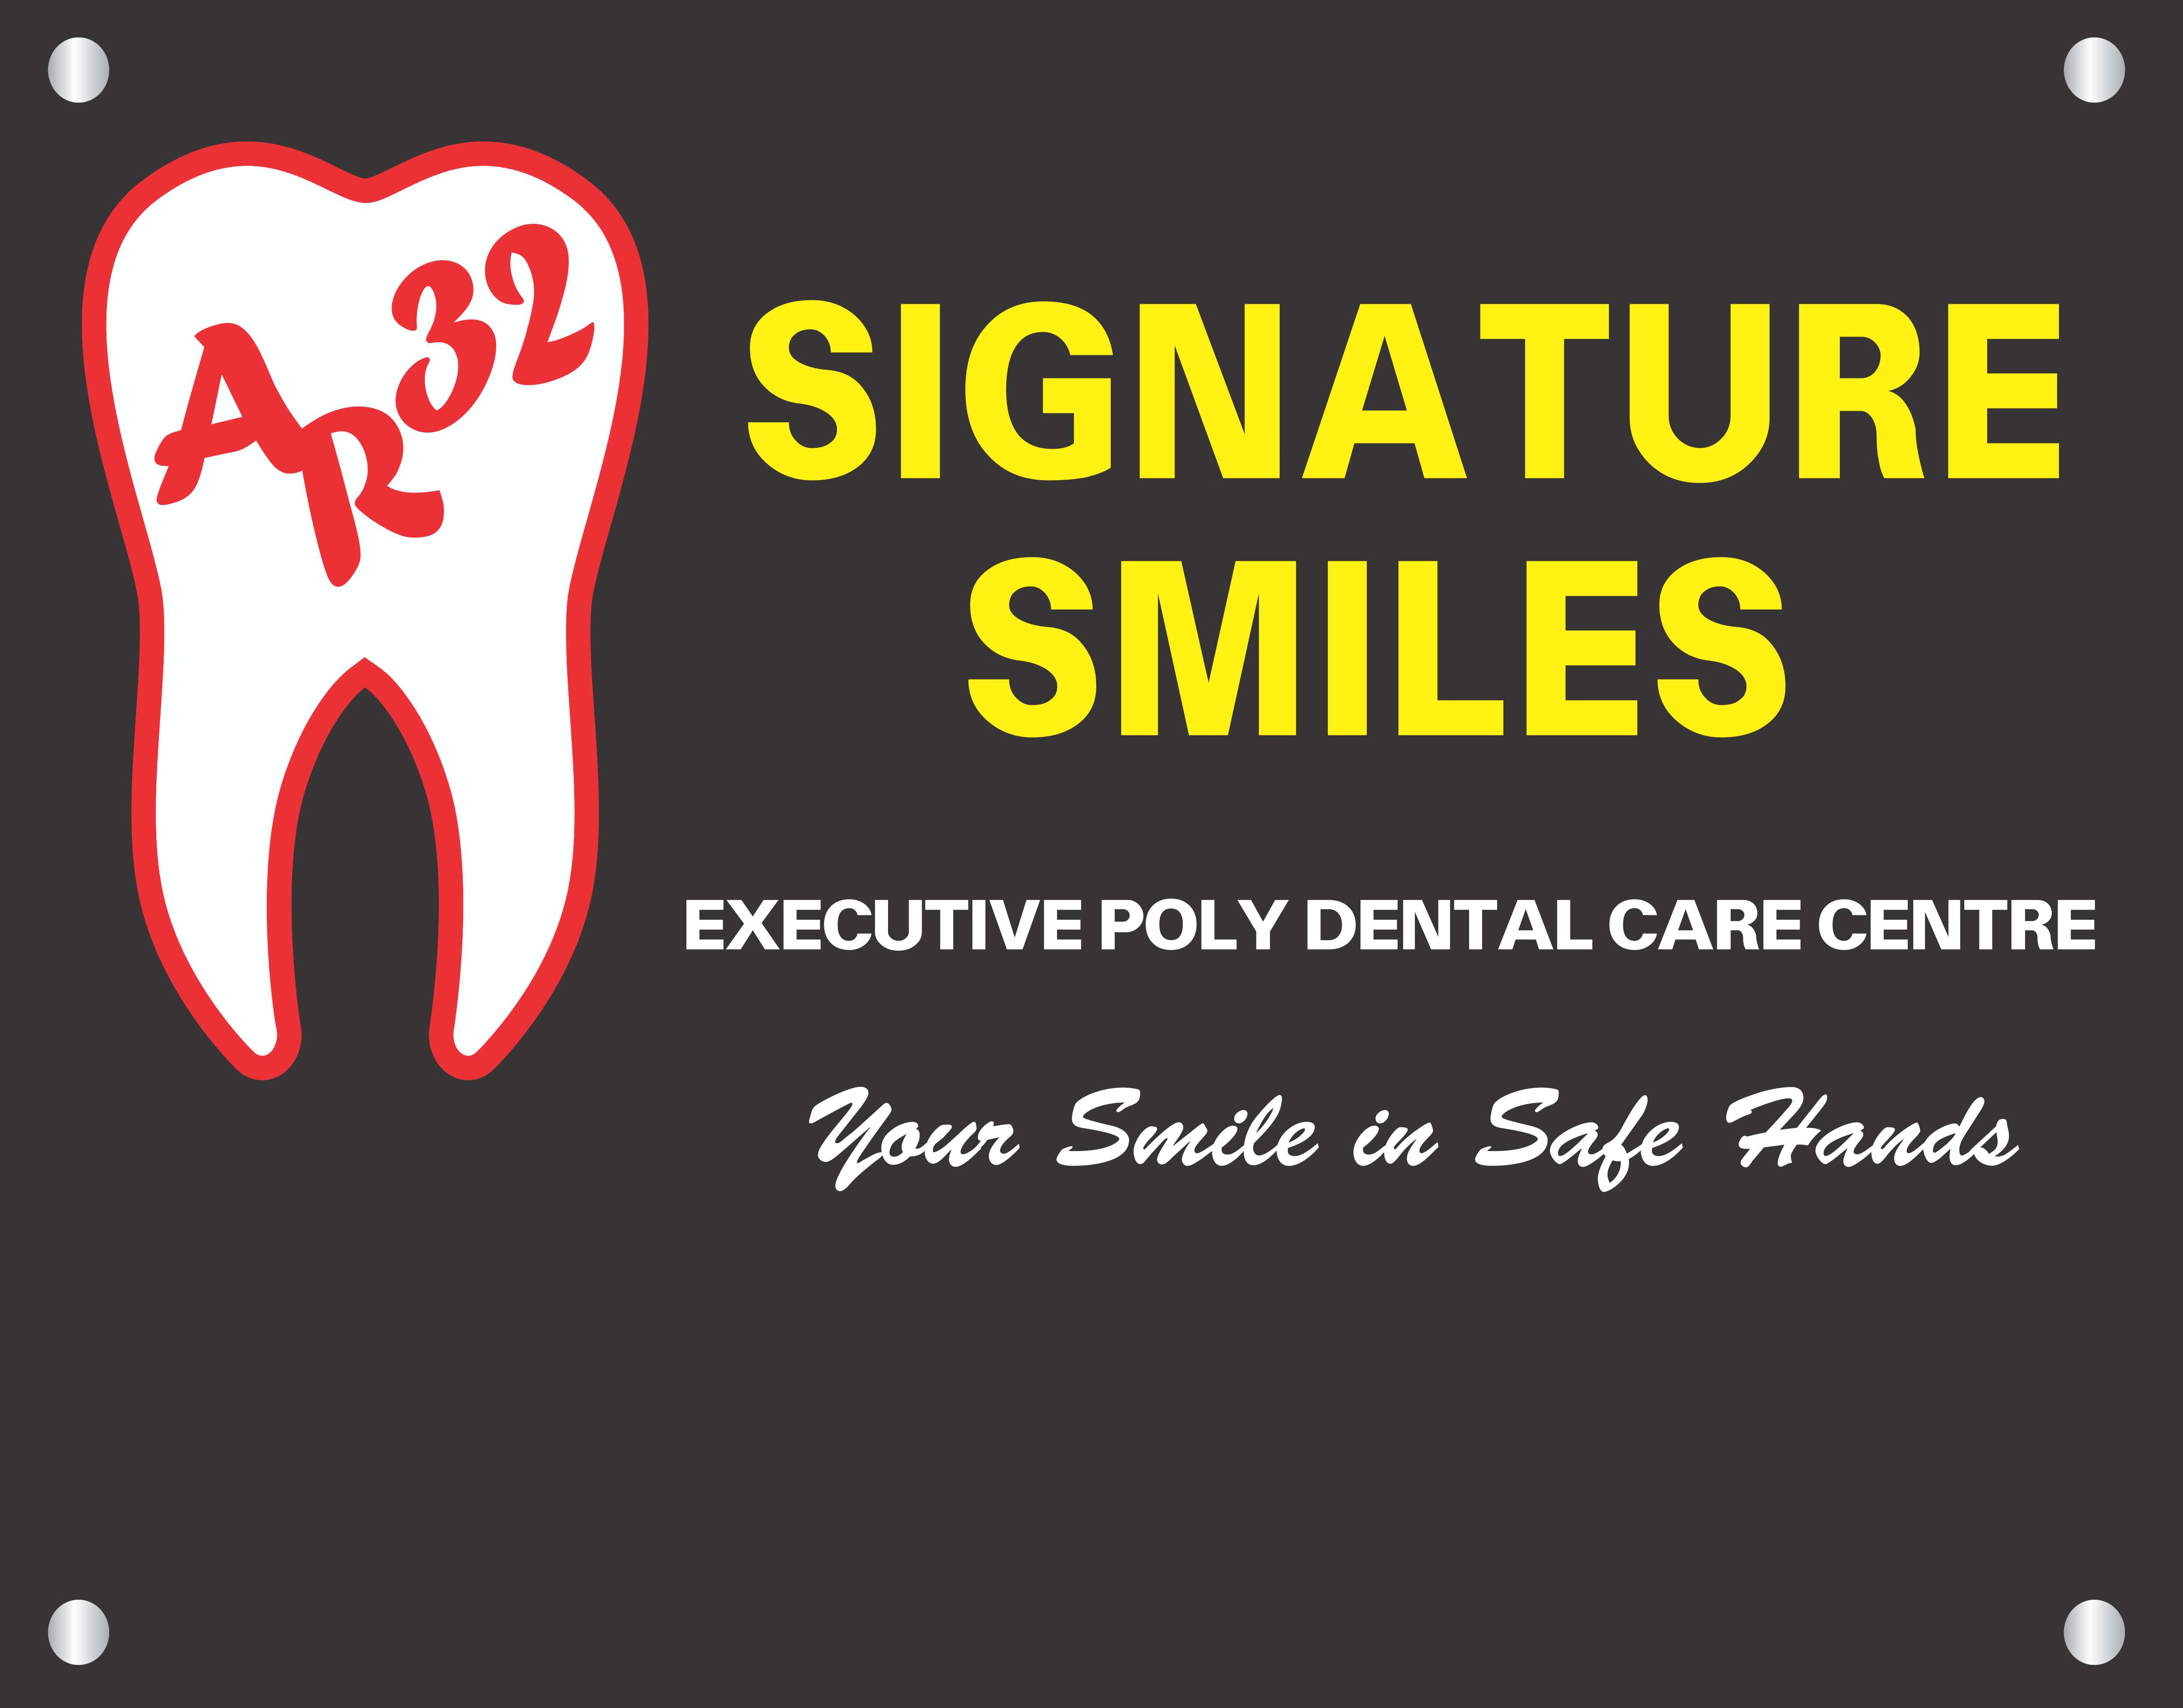 AR 32 Signature Smiles Dental Clinic|Veterinary|Medical Services